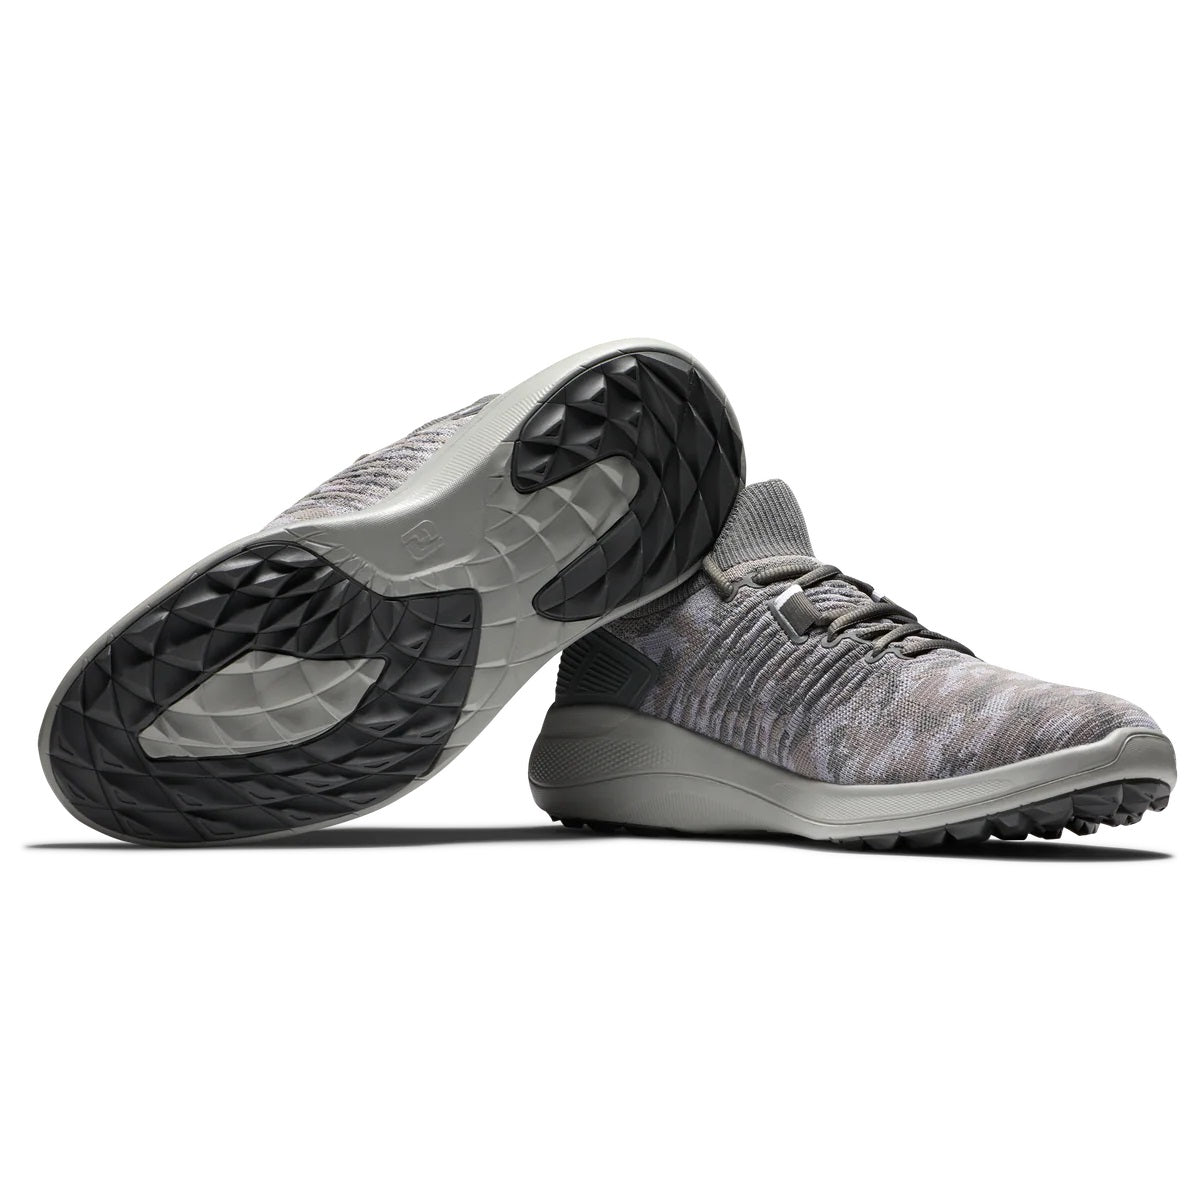 FootJoy Flex XP Men's Golf Shoes - Grey Camo | Golf Direct Now